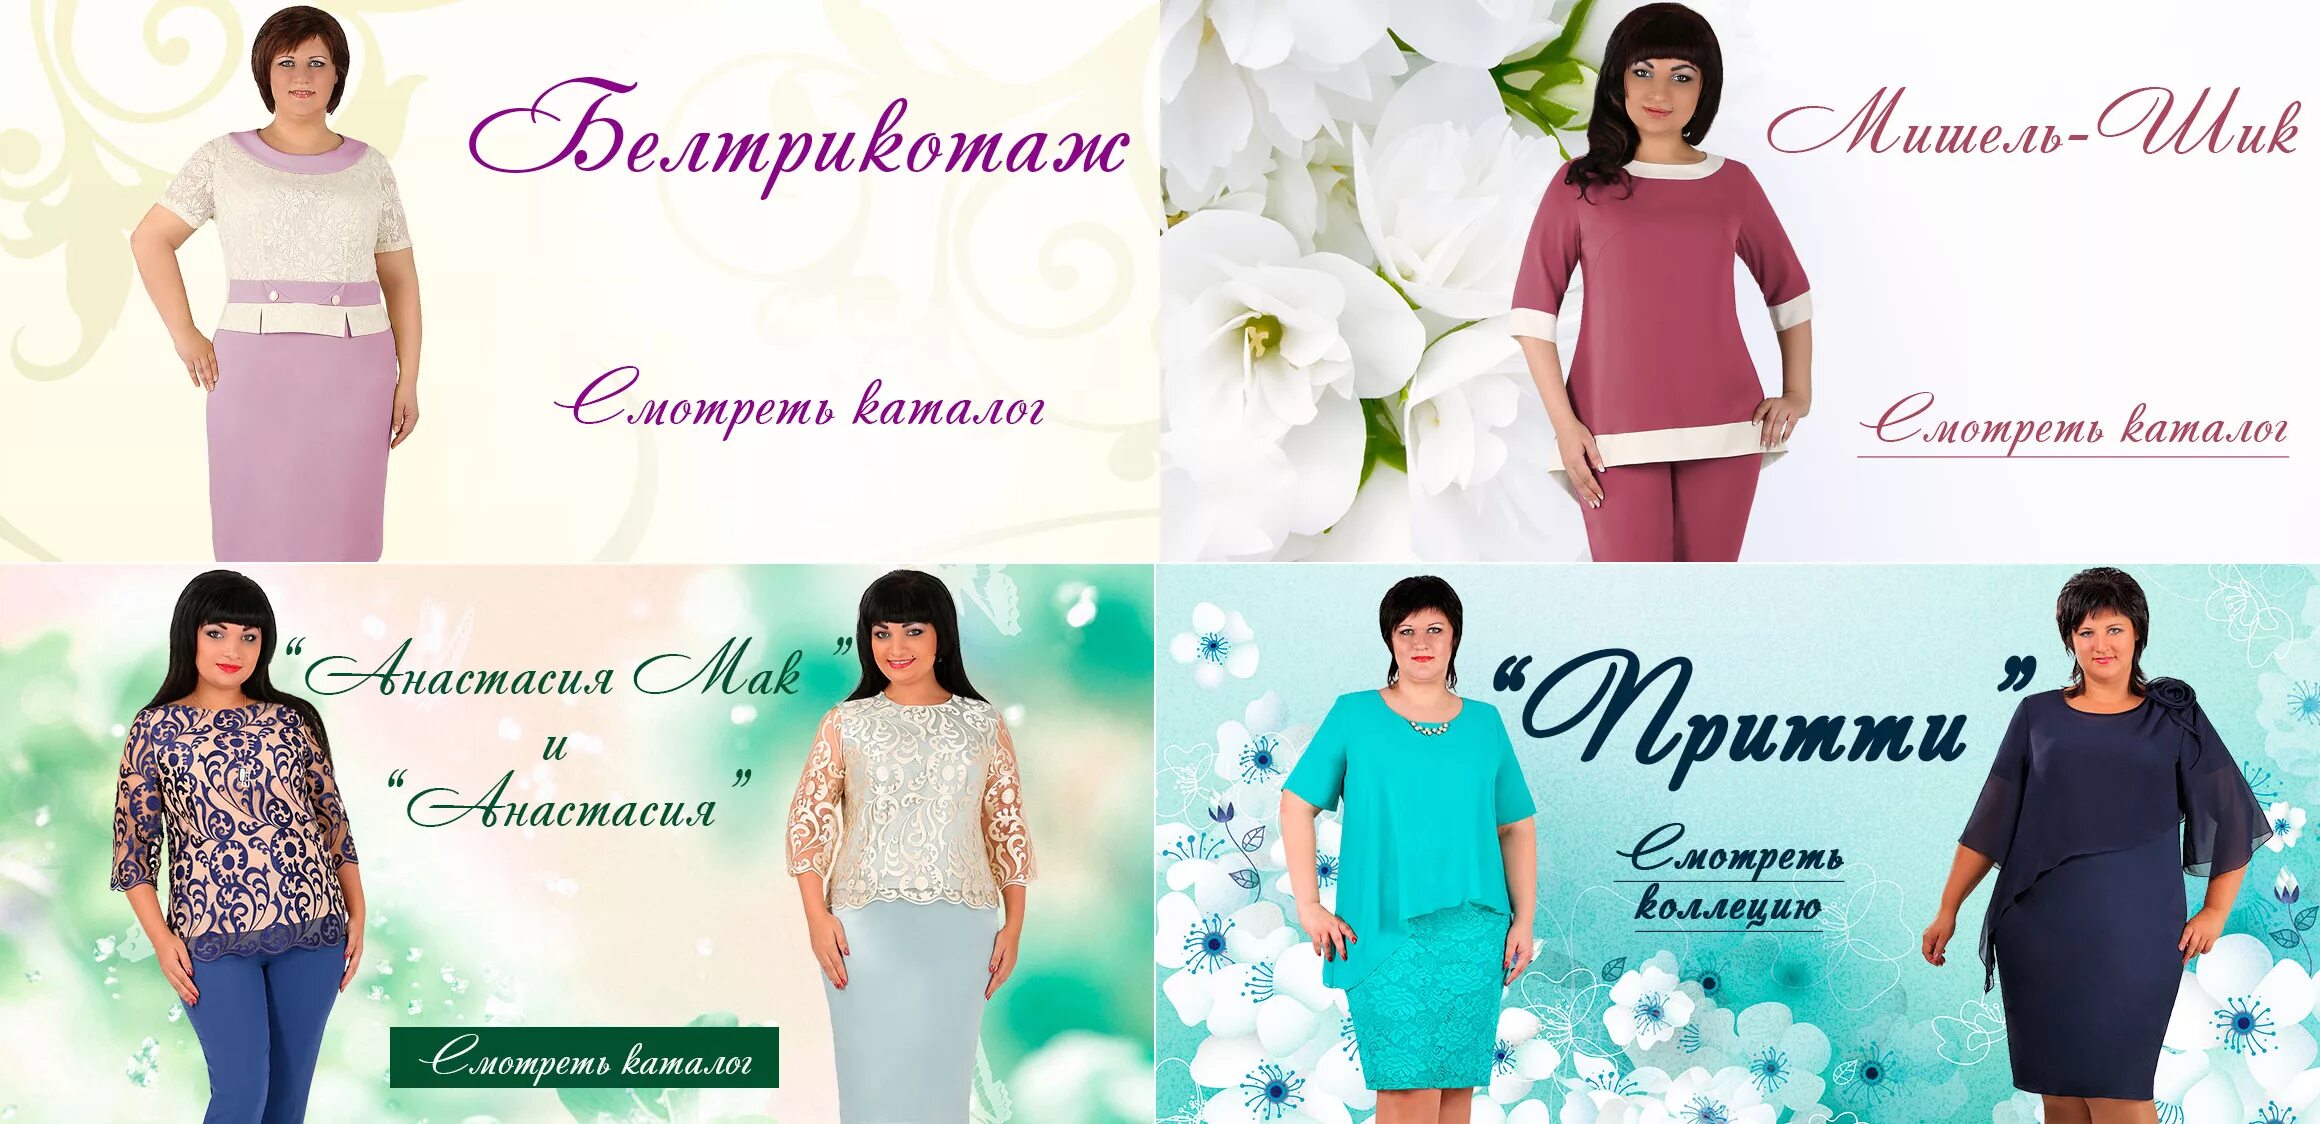 ALMONDSHOP реклама. ALMONDSHOP интернет магазин женской одежды. Алмондшоп белорусский. Алмонд шоп одежда интернет магазин. Альмондшоп интернет магазин женской